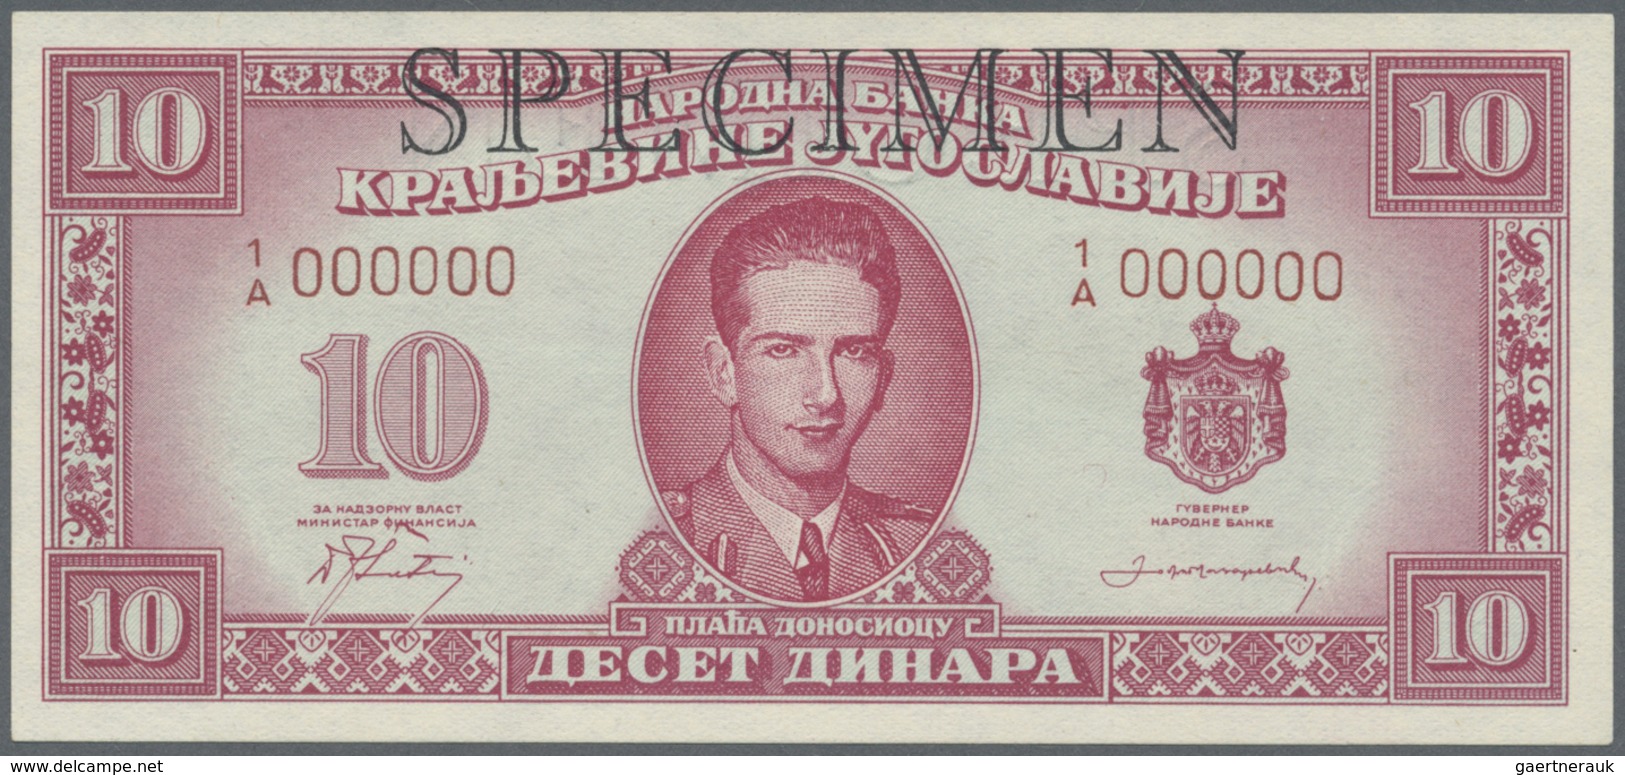 Yugoslavia / Jugoslavien: Not issued Banknote 5 Dinara series 1943 Specimen, P.35As, in perfect UNC